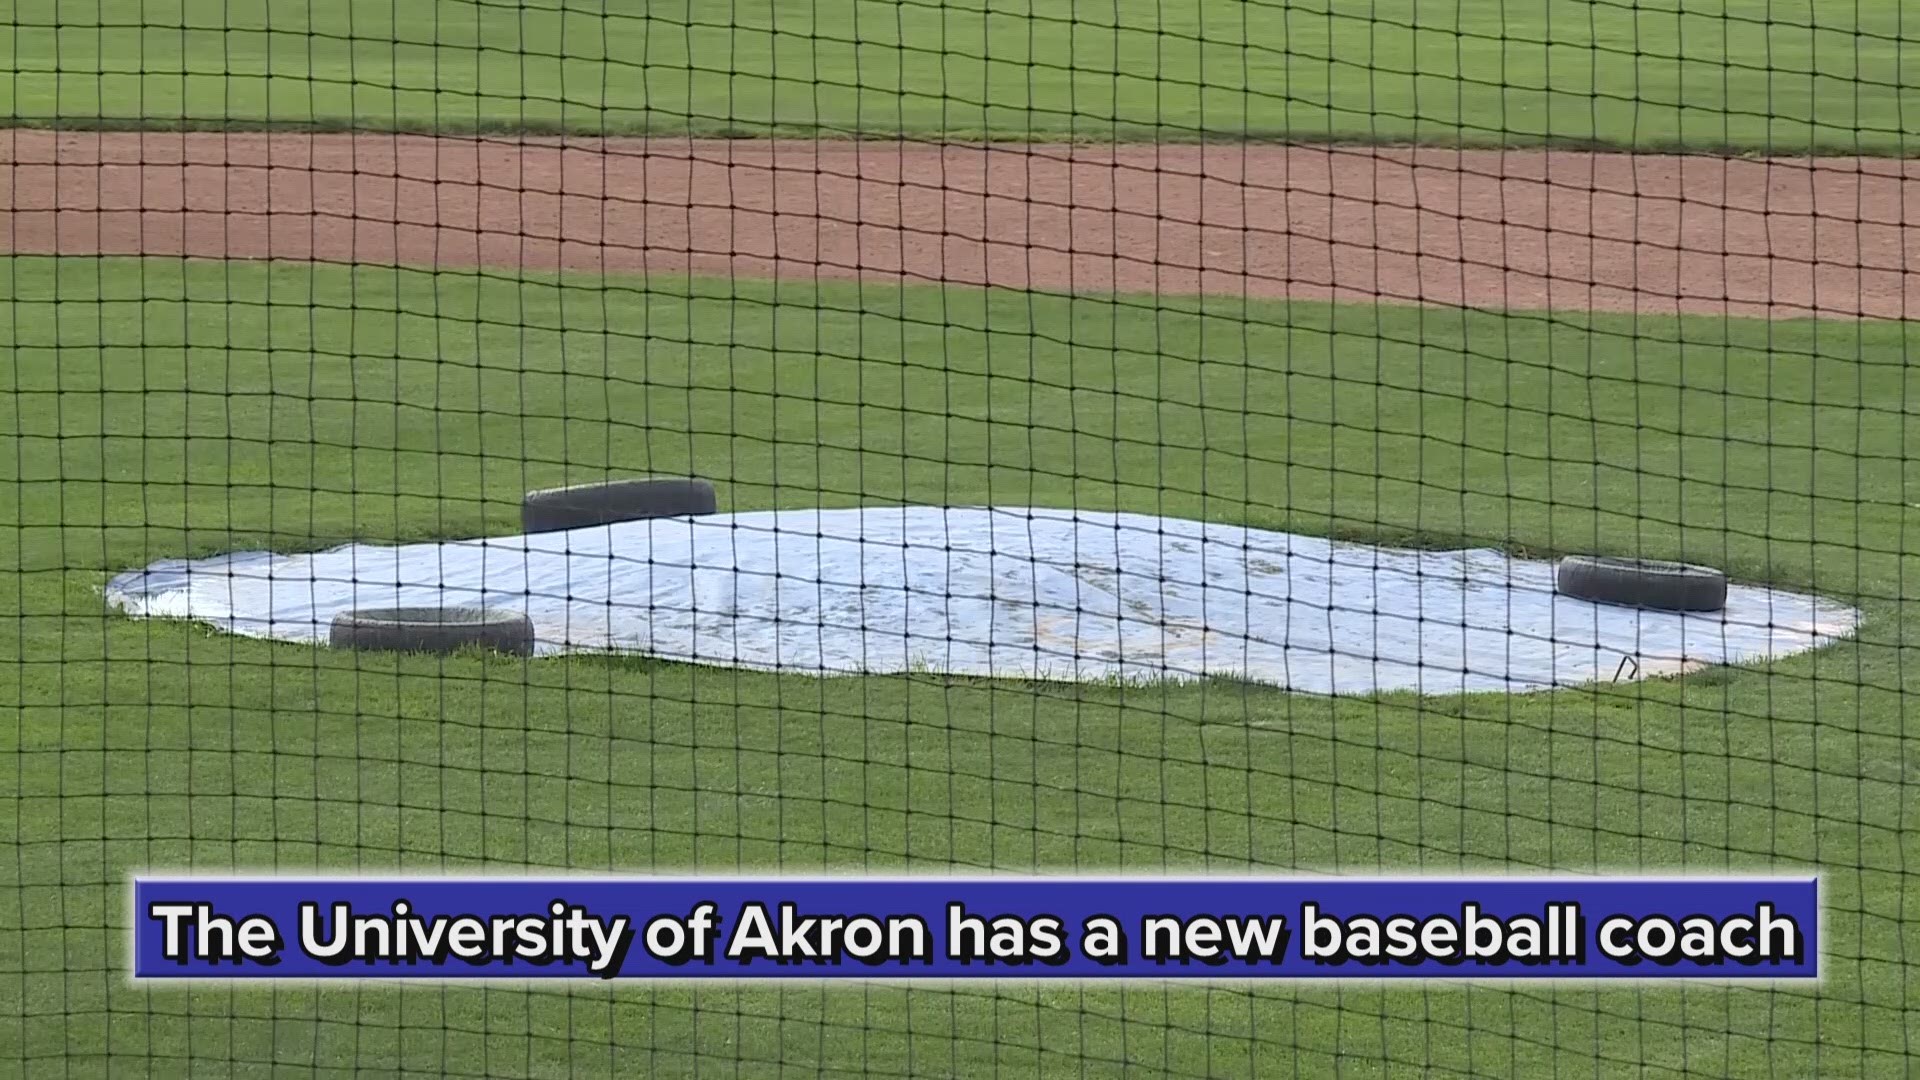 University of Akron announces former Cincinnati Reds star Chris Sabo as new baseball coach